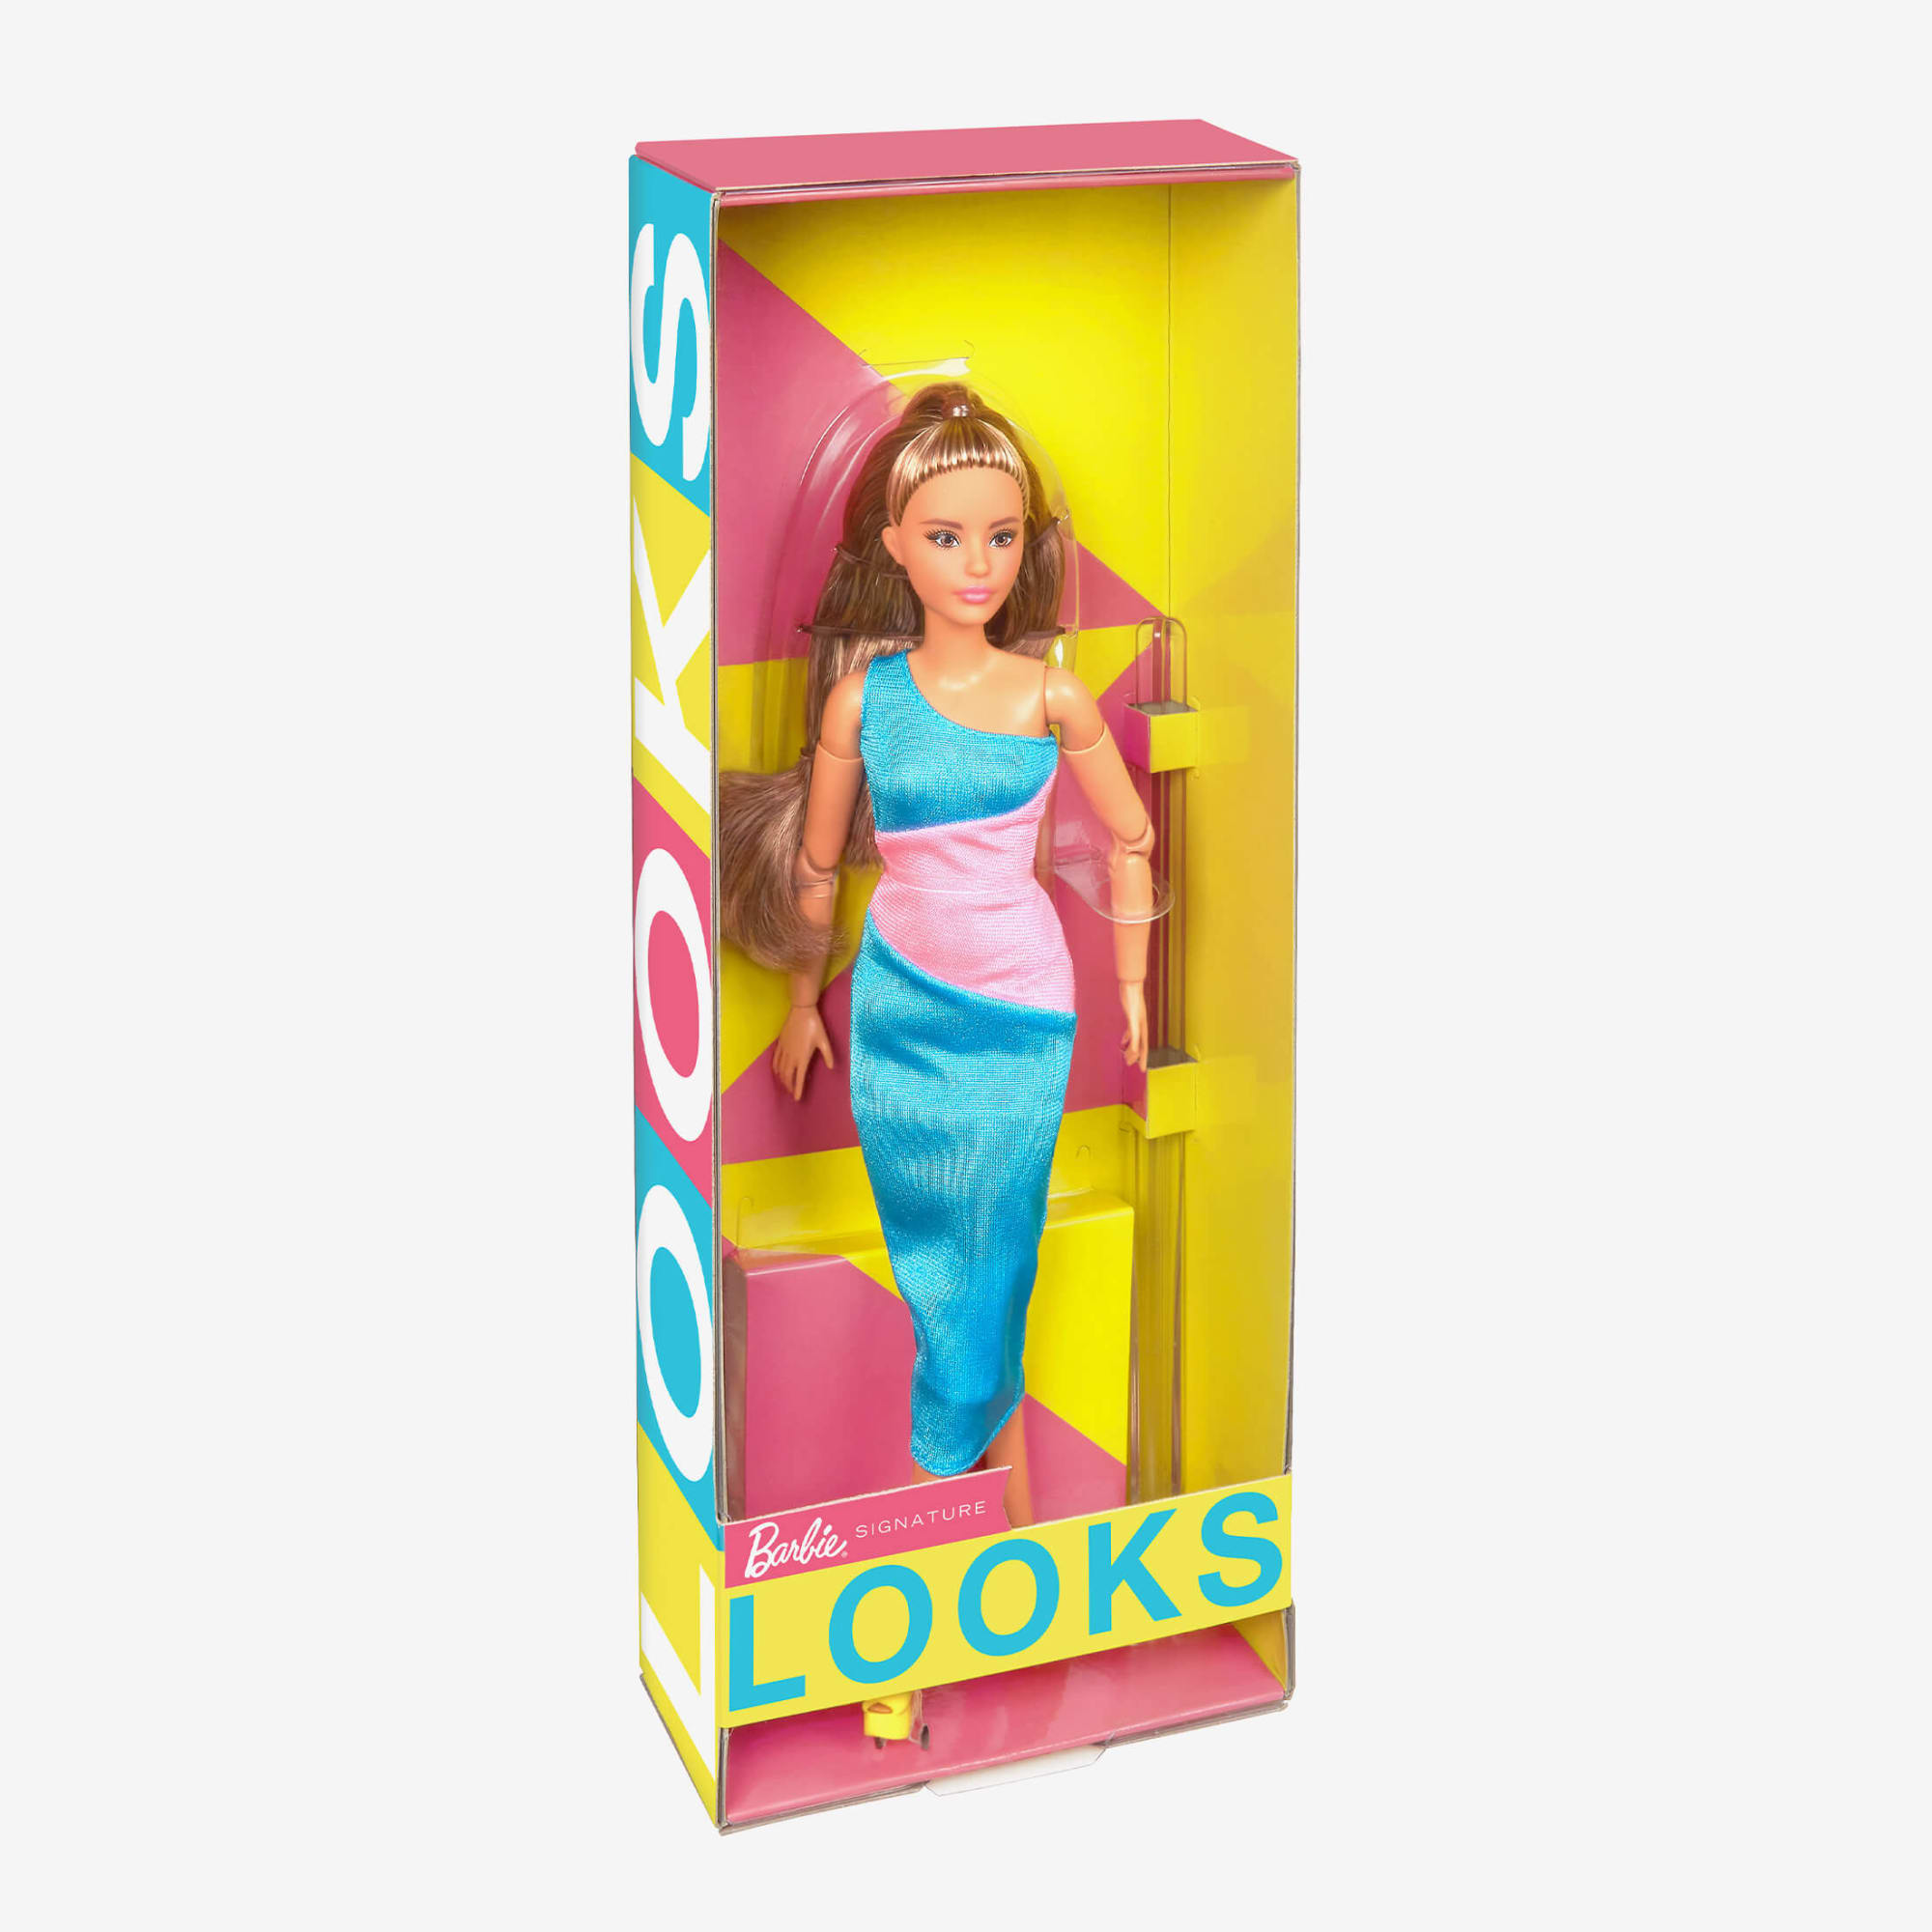 Barbie Signature Barbie Looks Doll (Curvy, Brunette) – Mattel Creations